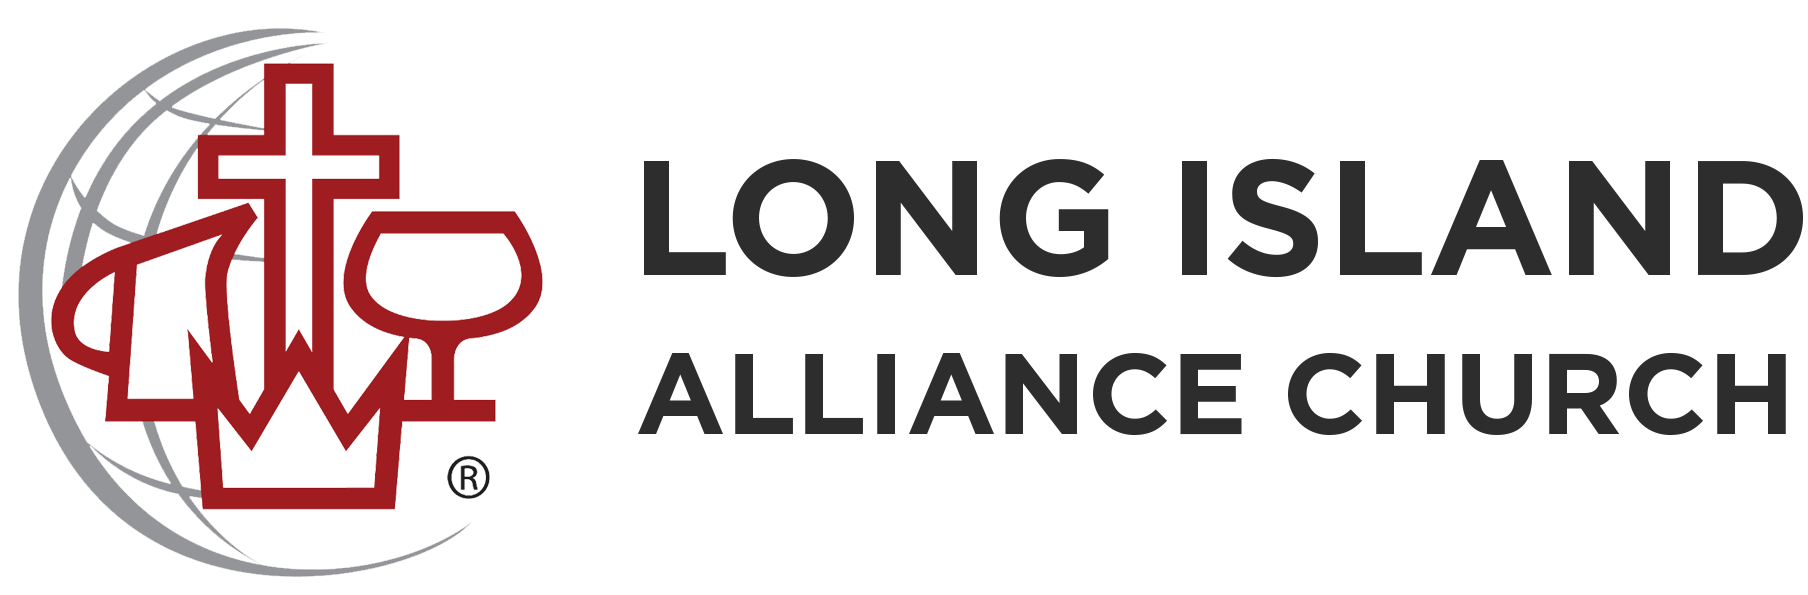 Long Island Alliance Church